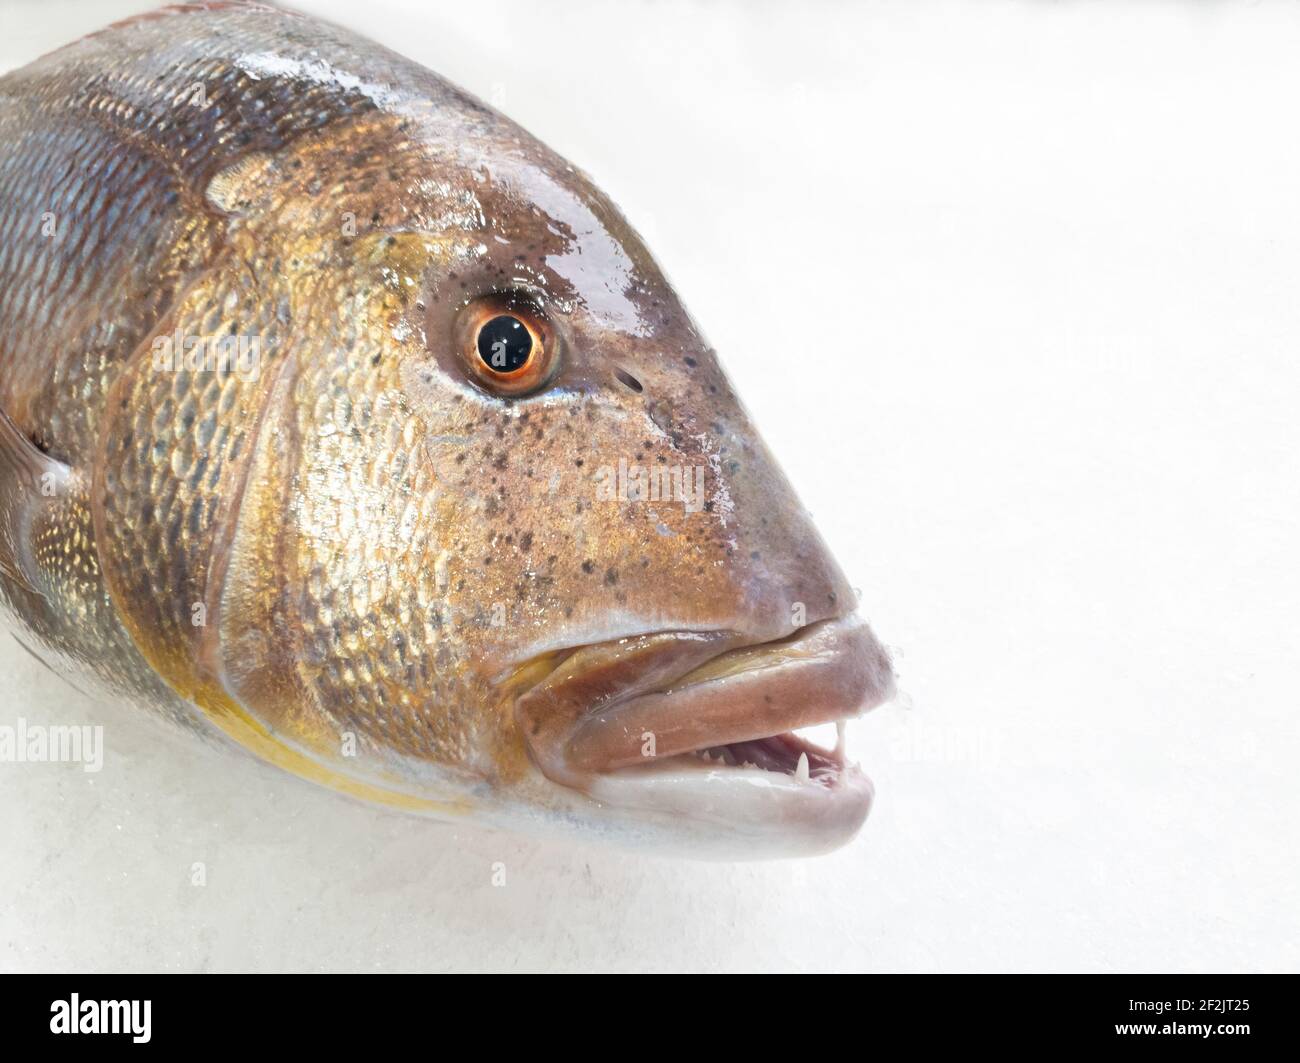 A big dentex in a fish market on ice,close up details. Common dentex (Dentex dentex). Stock Photo